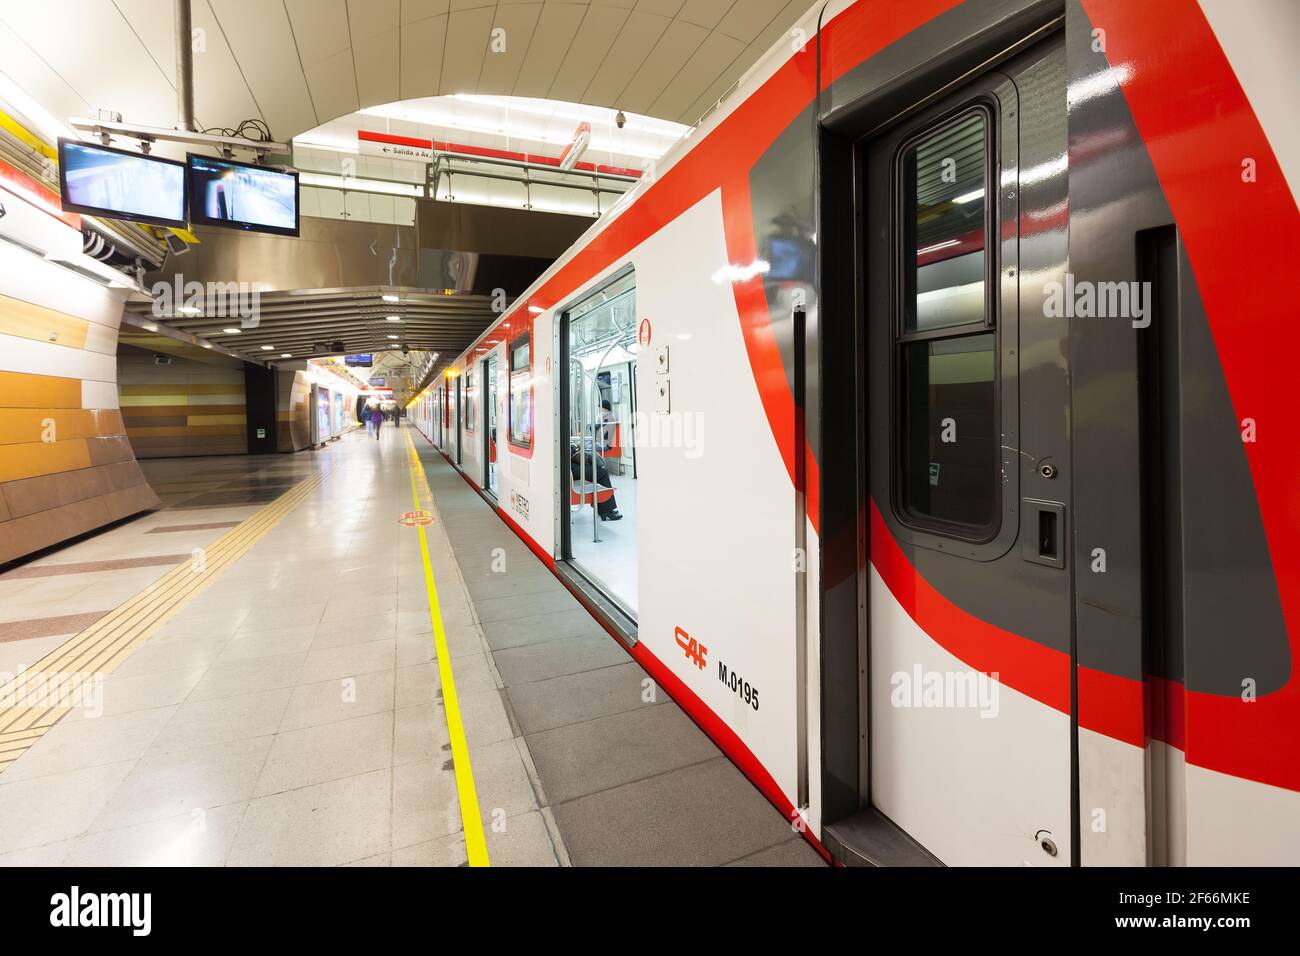 Santiago de Chile, Region Metropolitana, Chile - Train before departure at Metro de Santiago subway system. Stock Photo